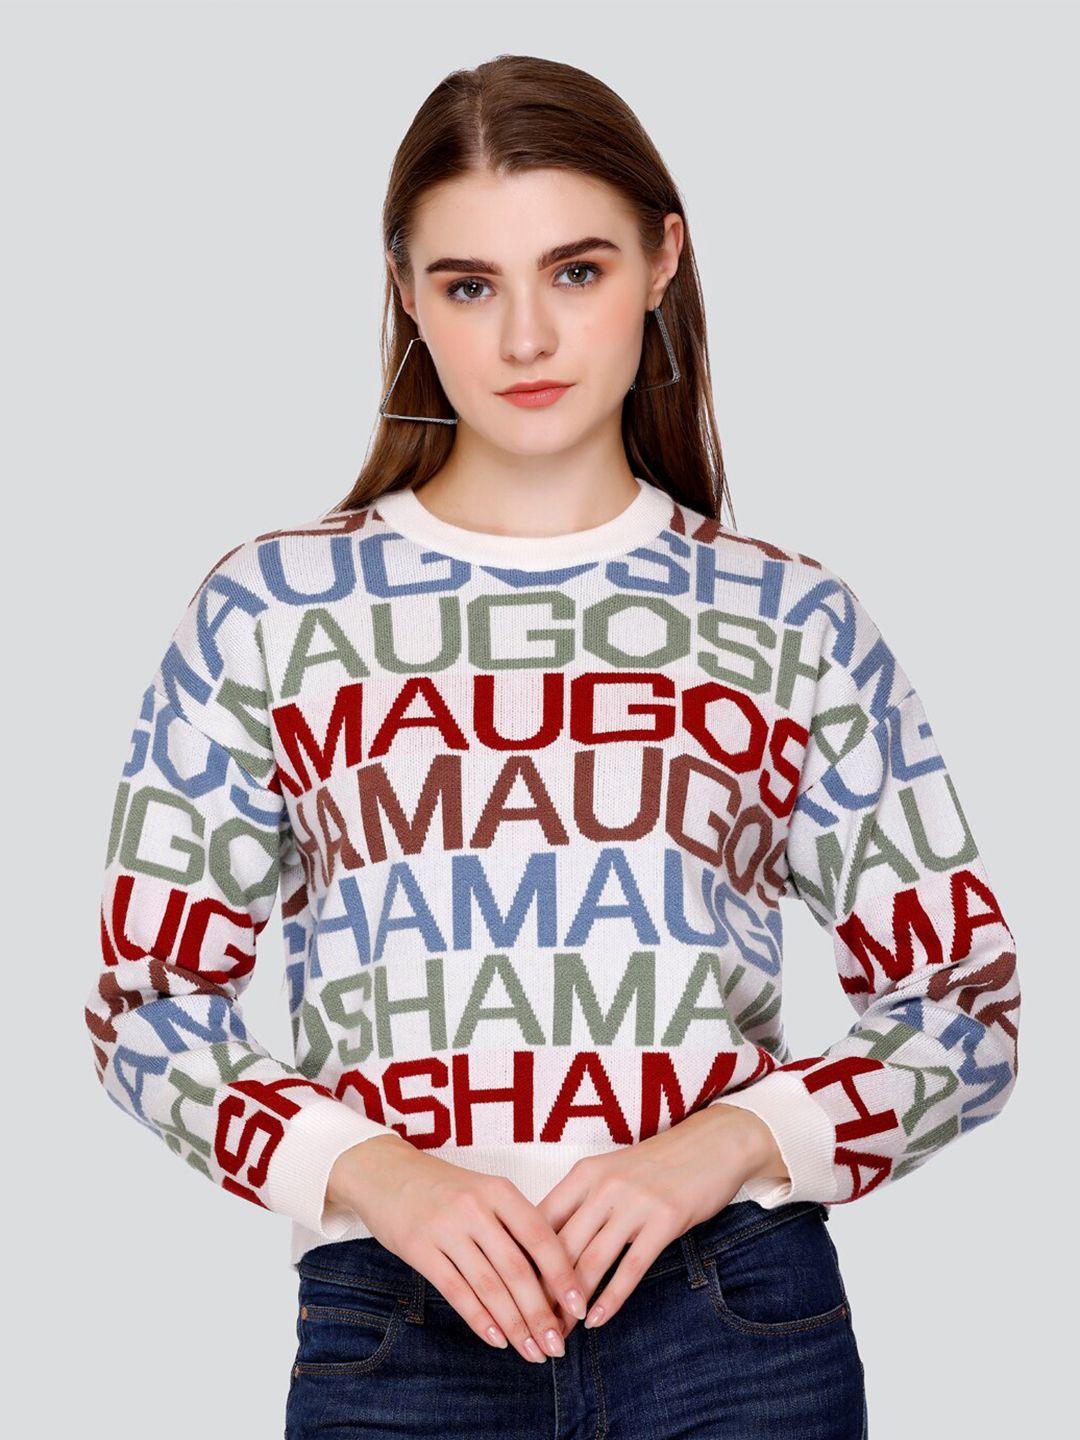 gosha & mau typographic printed woollen top